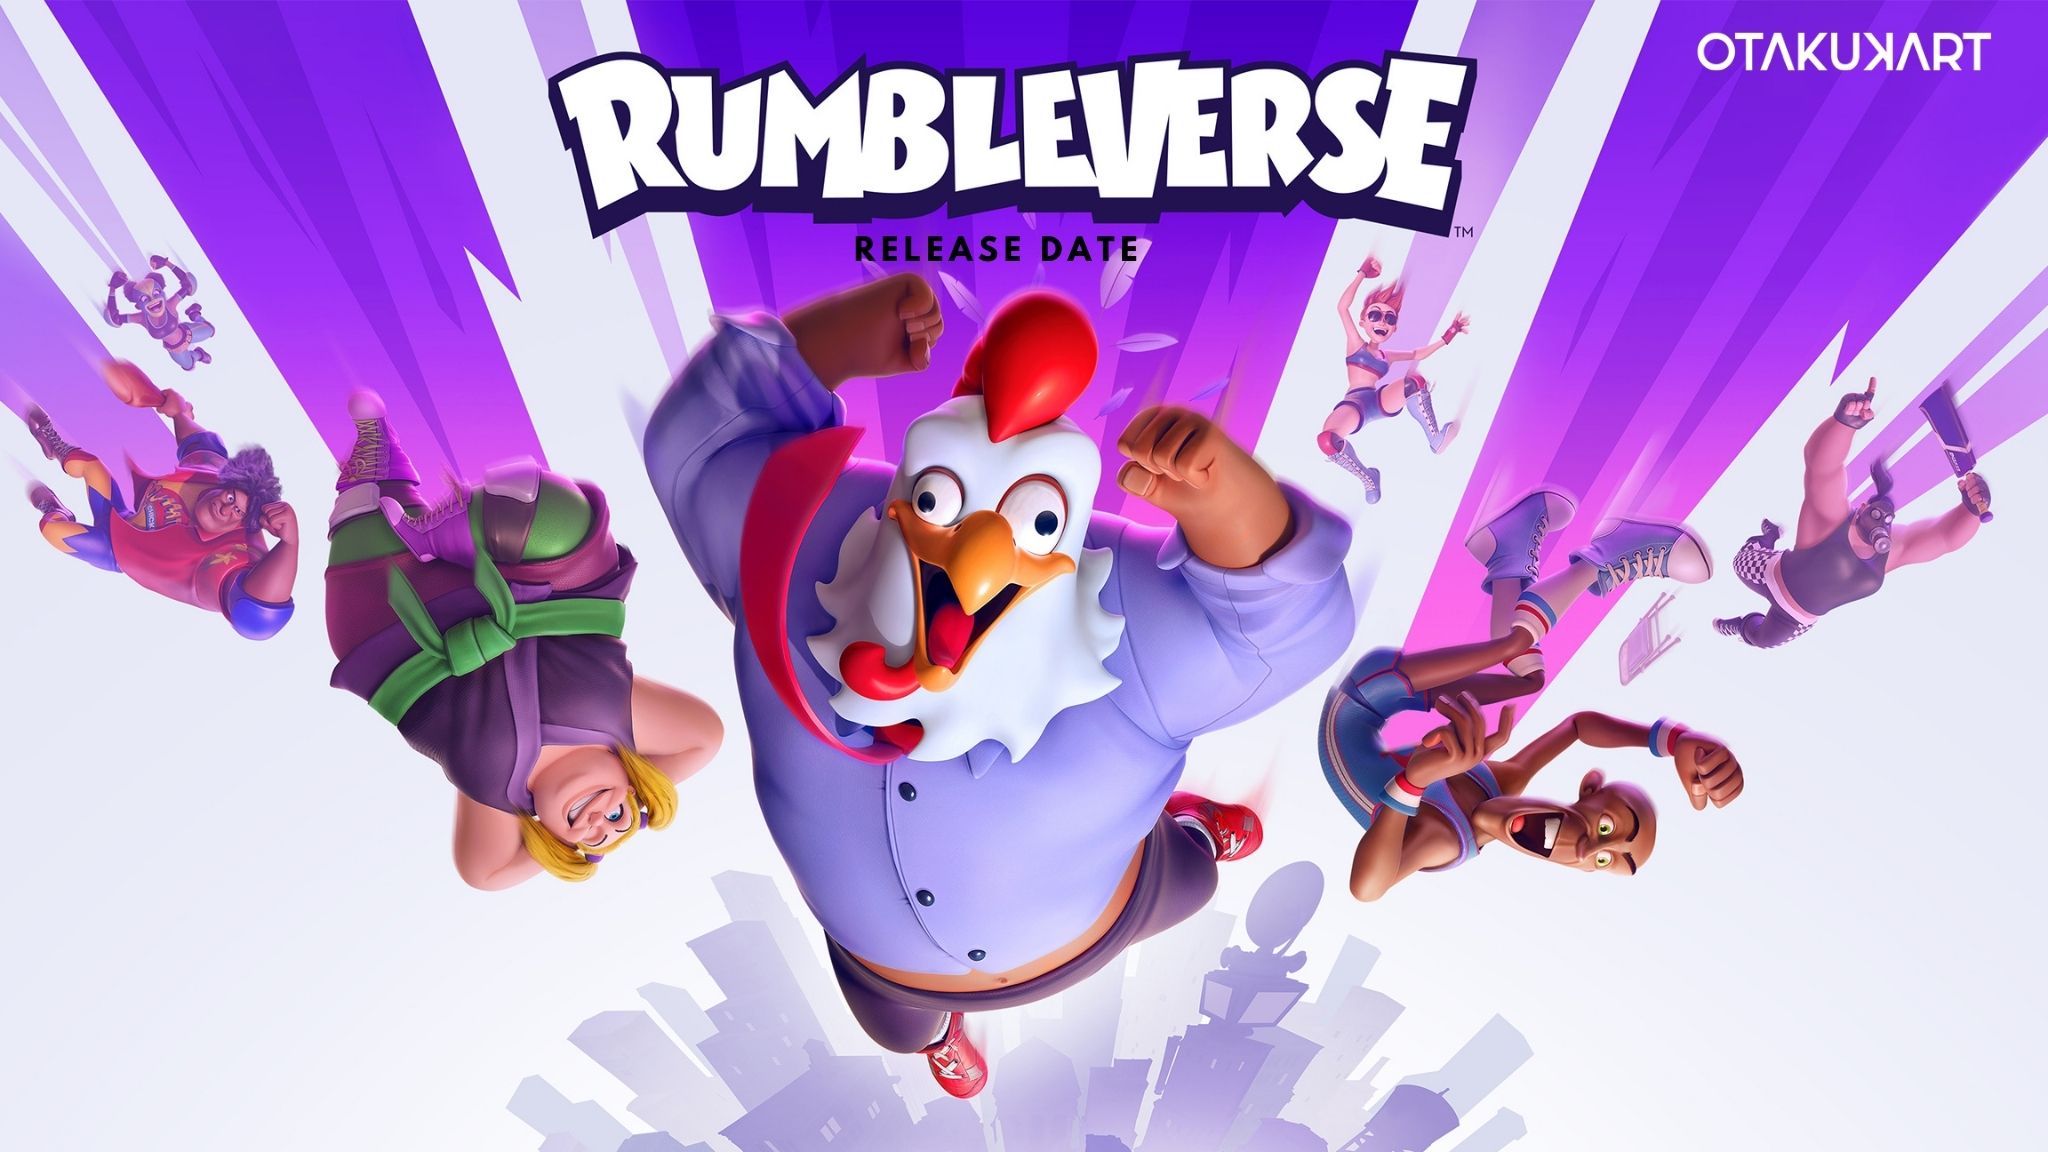 Rumbleverse release date